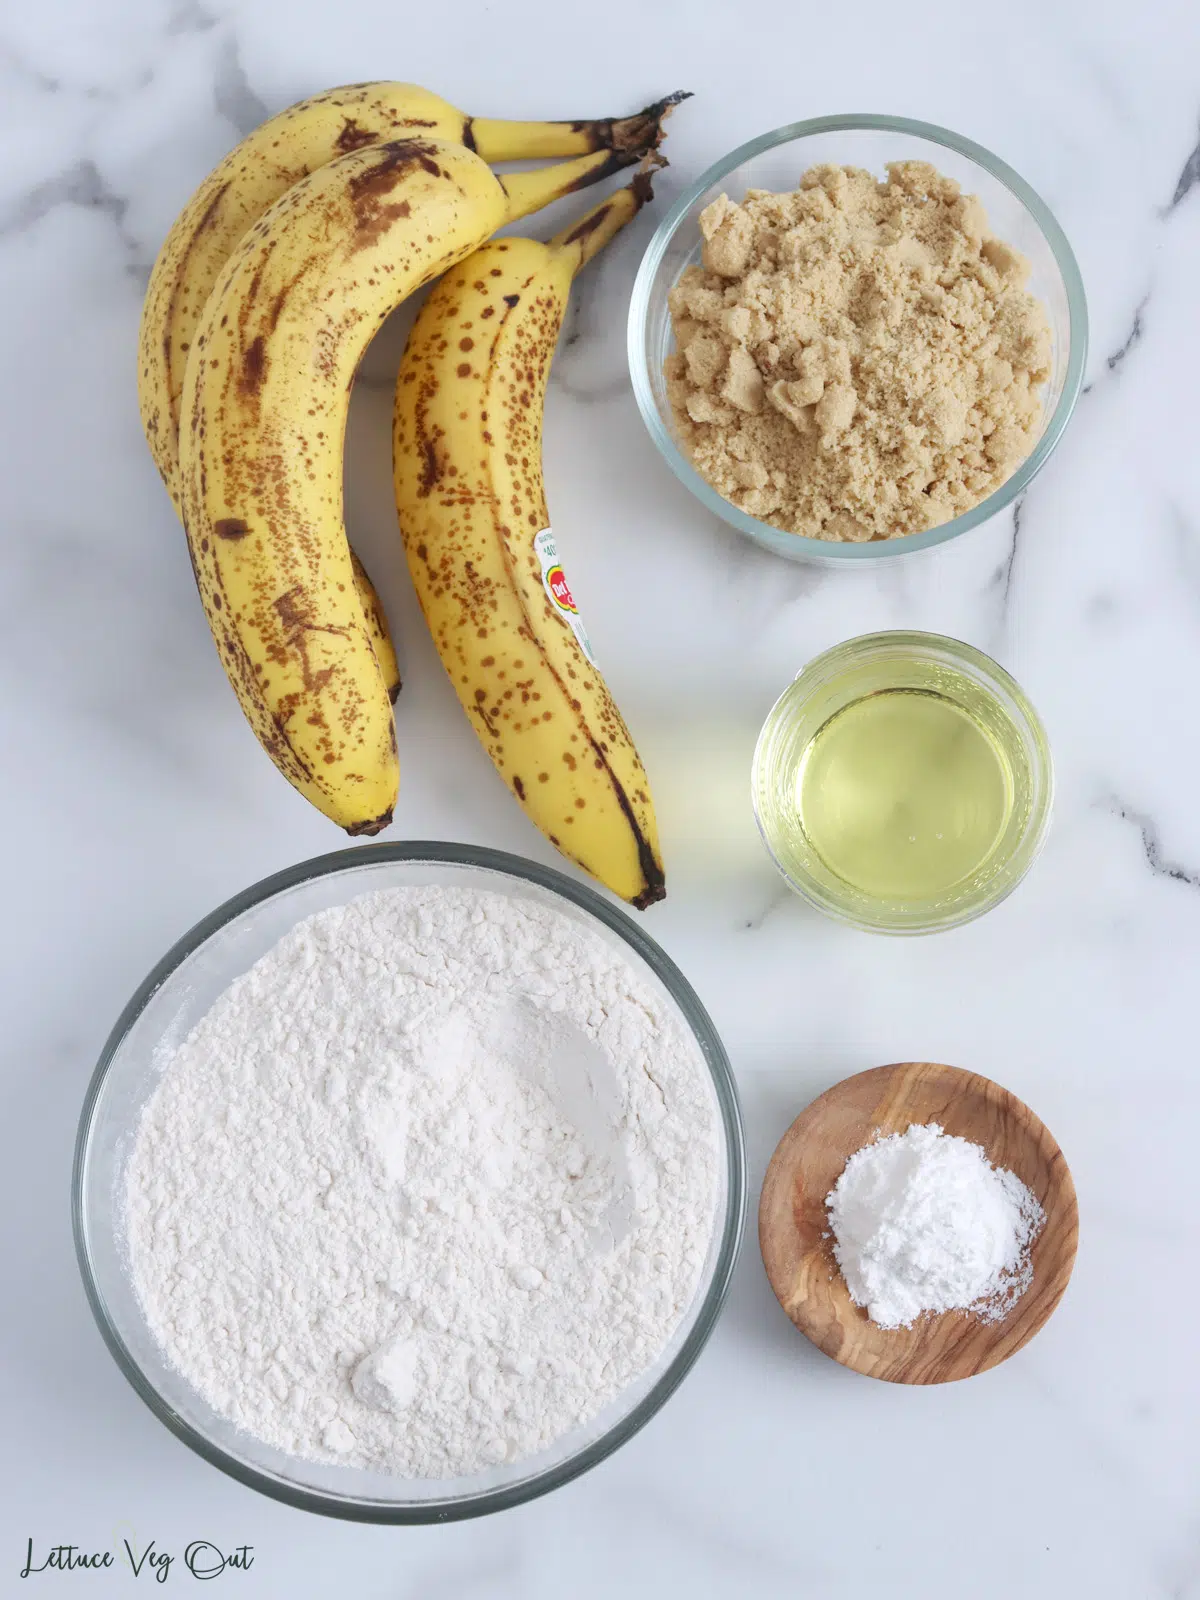 Five ingredients for vegan banana bread.